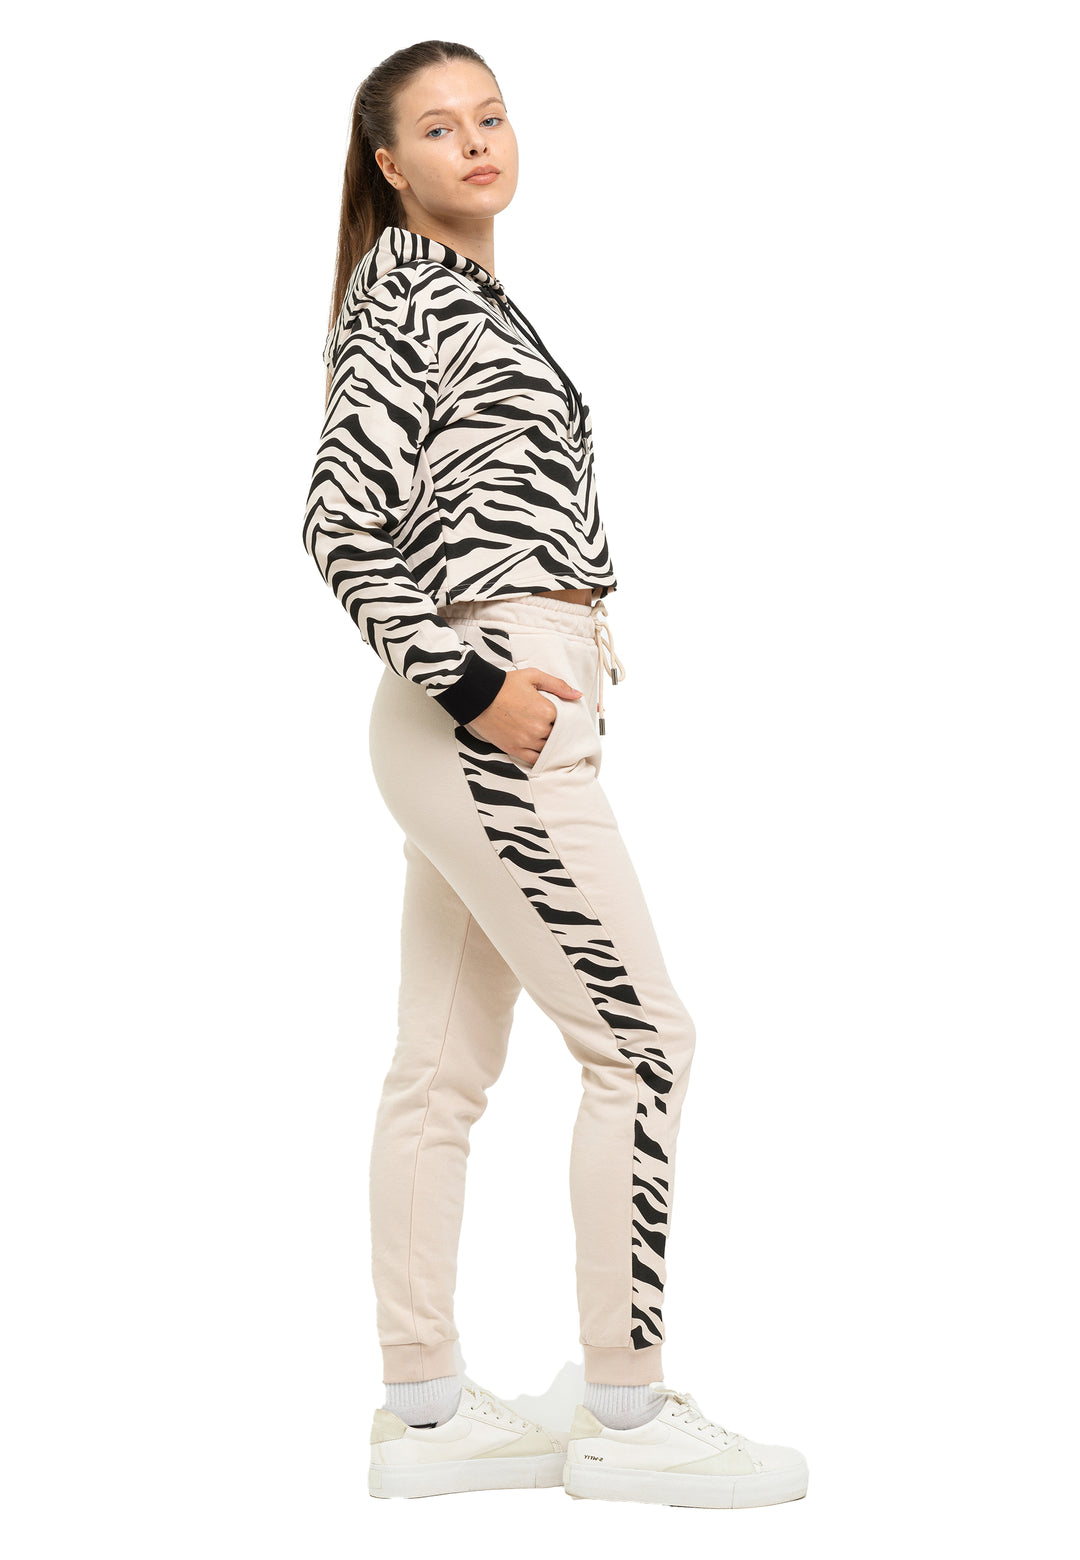 Tom Barron Ladies Stylish Zebra Tracksuit